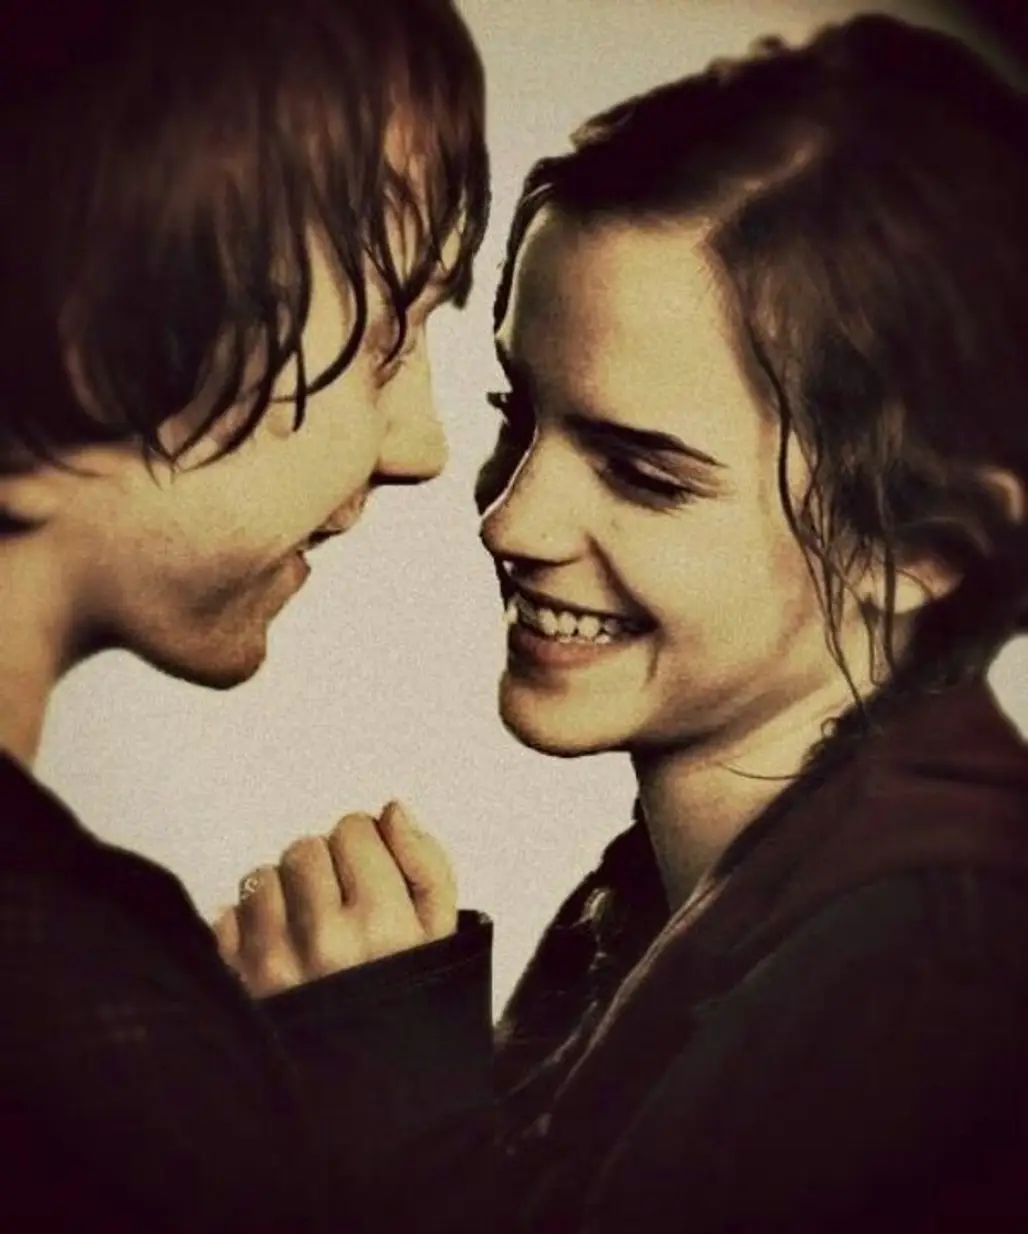 Rupert Grint & Emma Watson in "Harry Potter"